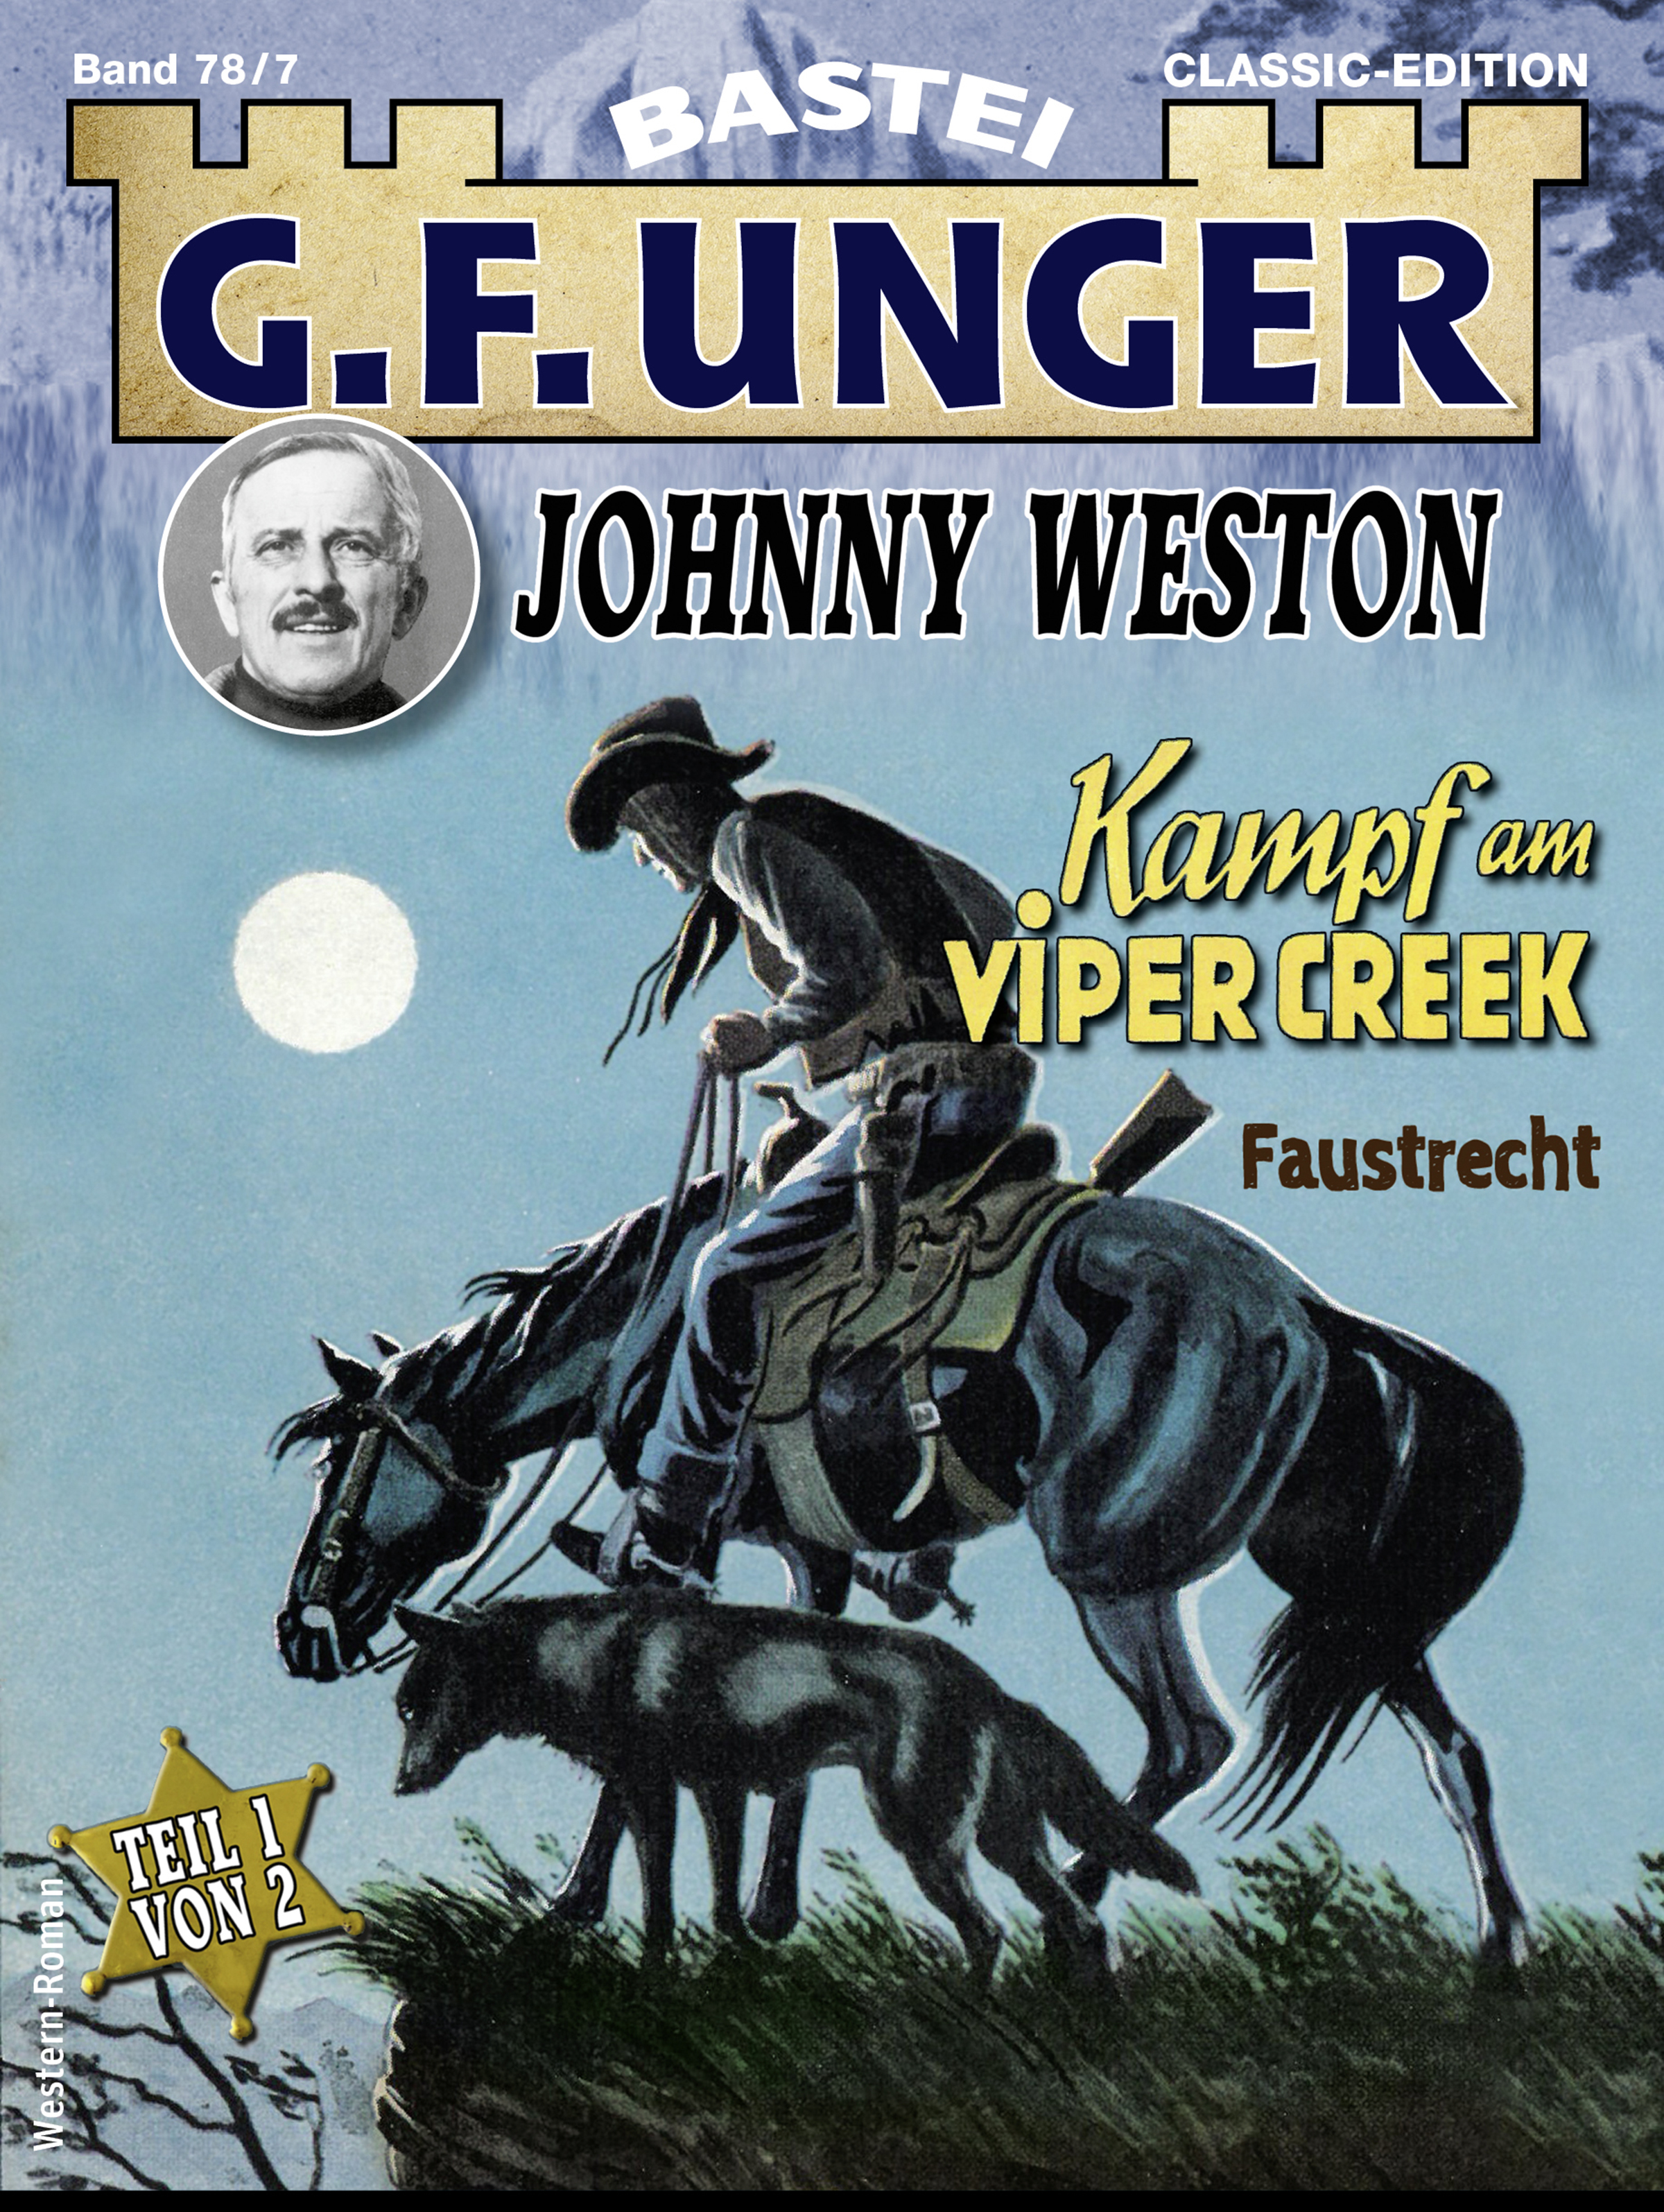 G. F. Unger Classics Johnny Weston 7